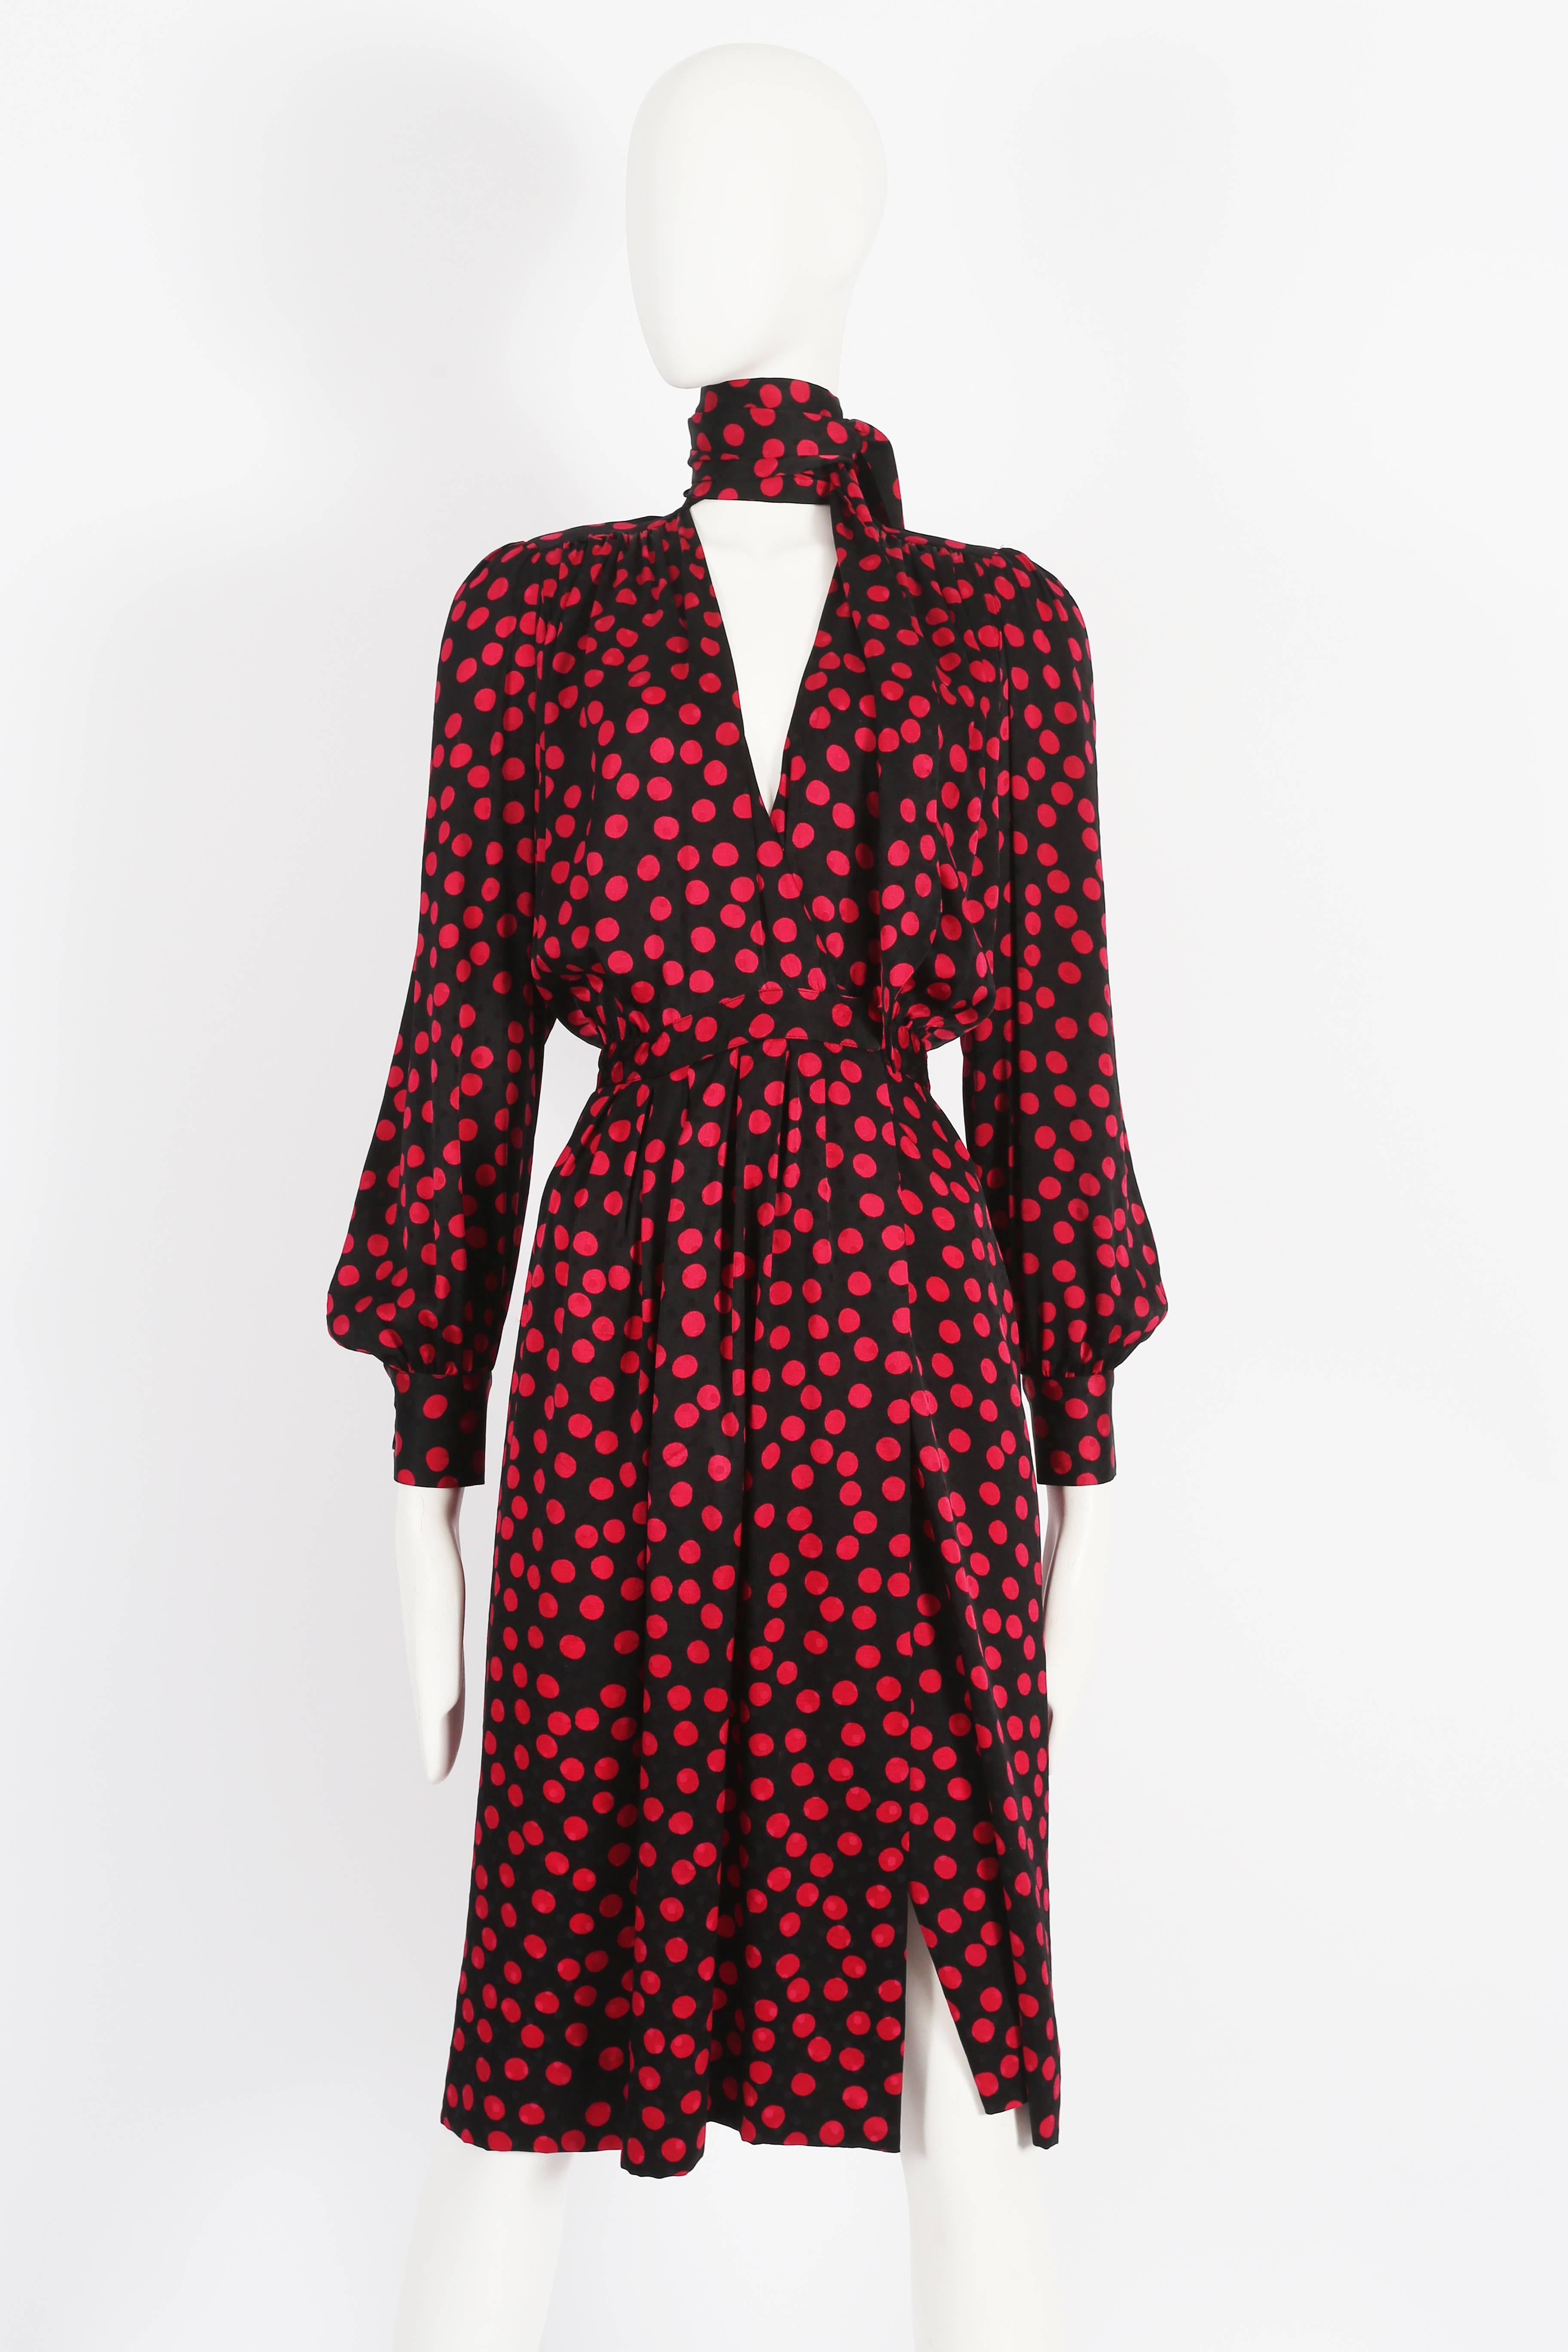 Yves Saint Laurent silk polka dot evening wrap dress, circa 1970s. 